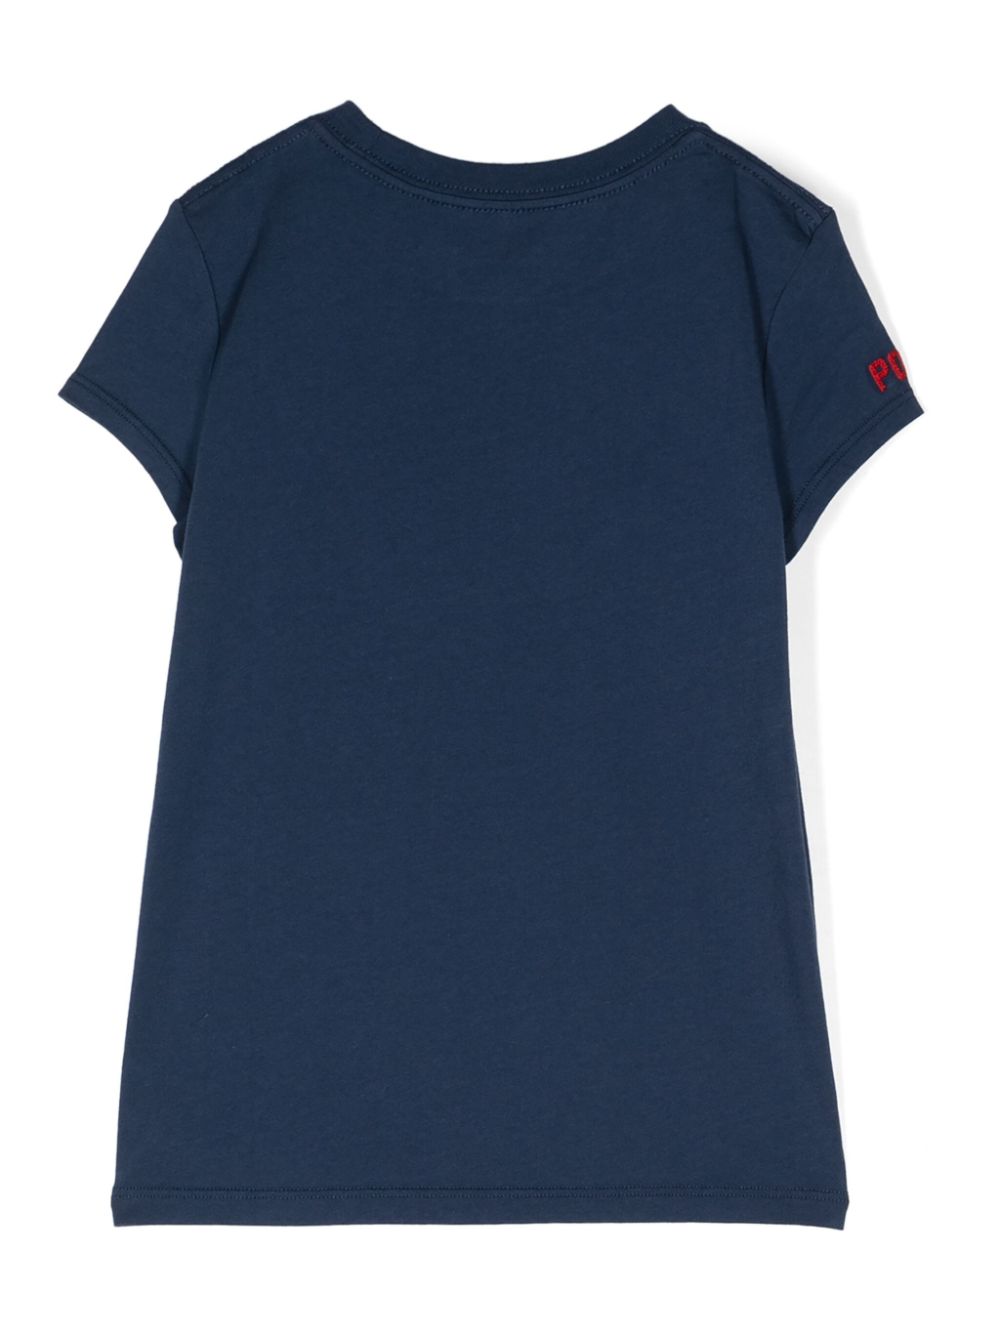 T-shirt blu navy bambina